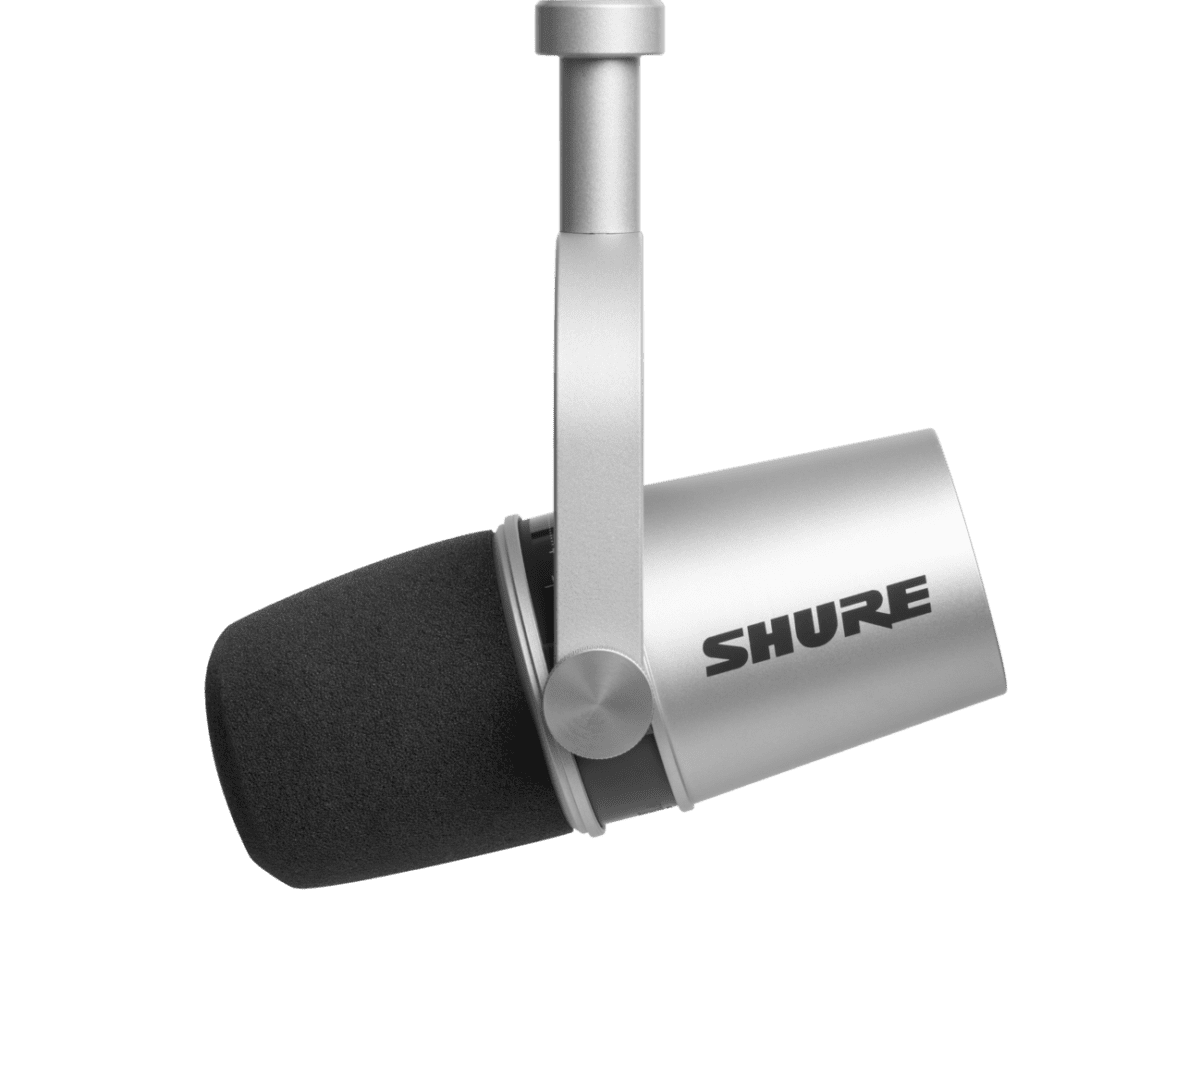 Shure MV7 USB Podcast Microphone - Silver